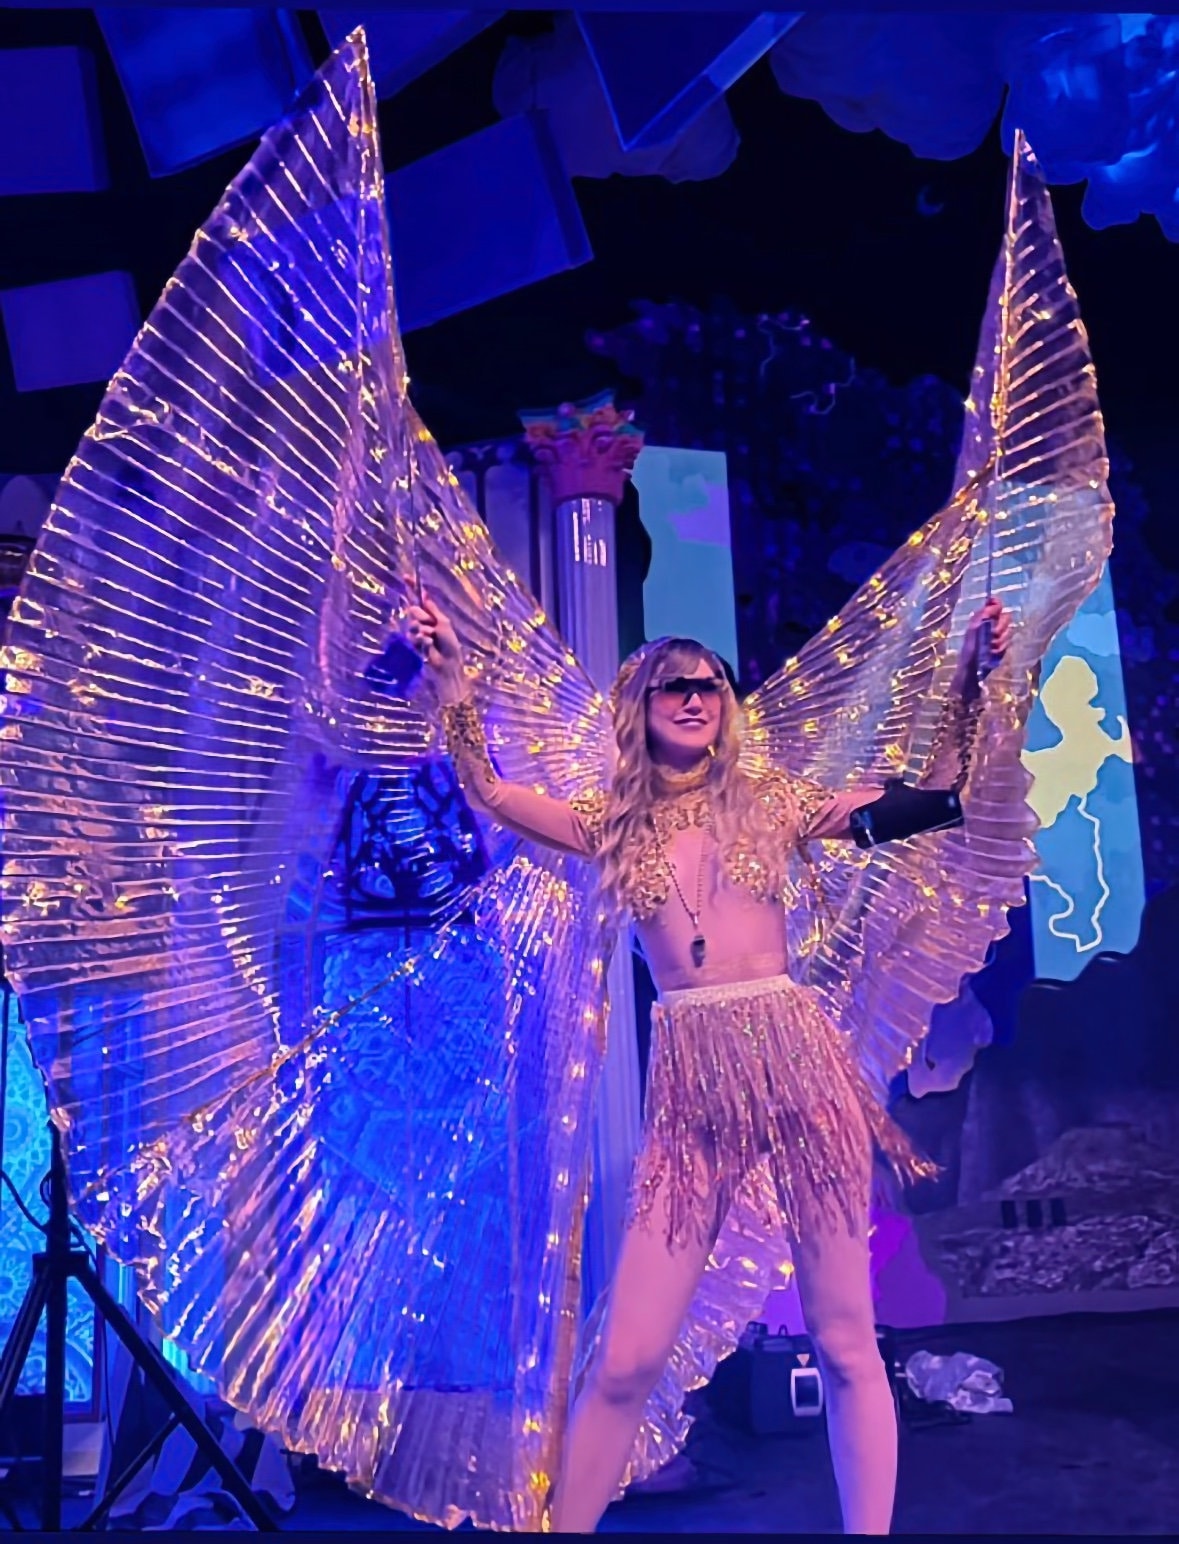 Athena Gold Sequin Leotard and Skirt / Festival Bodysuit / Halloween Party / Tassel Catsuit Burning Man Disco Performer Stage Costume Fringe